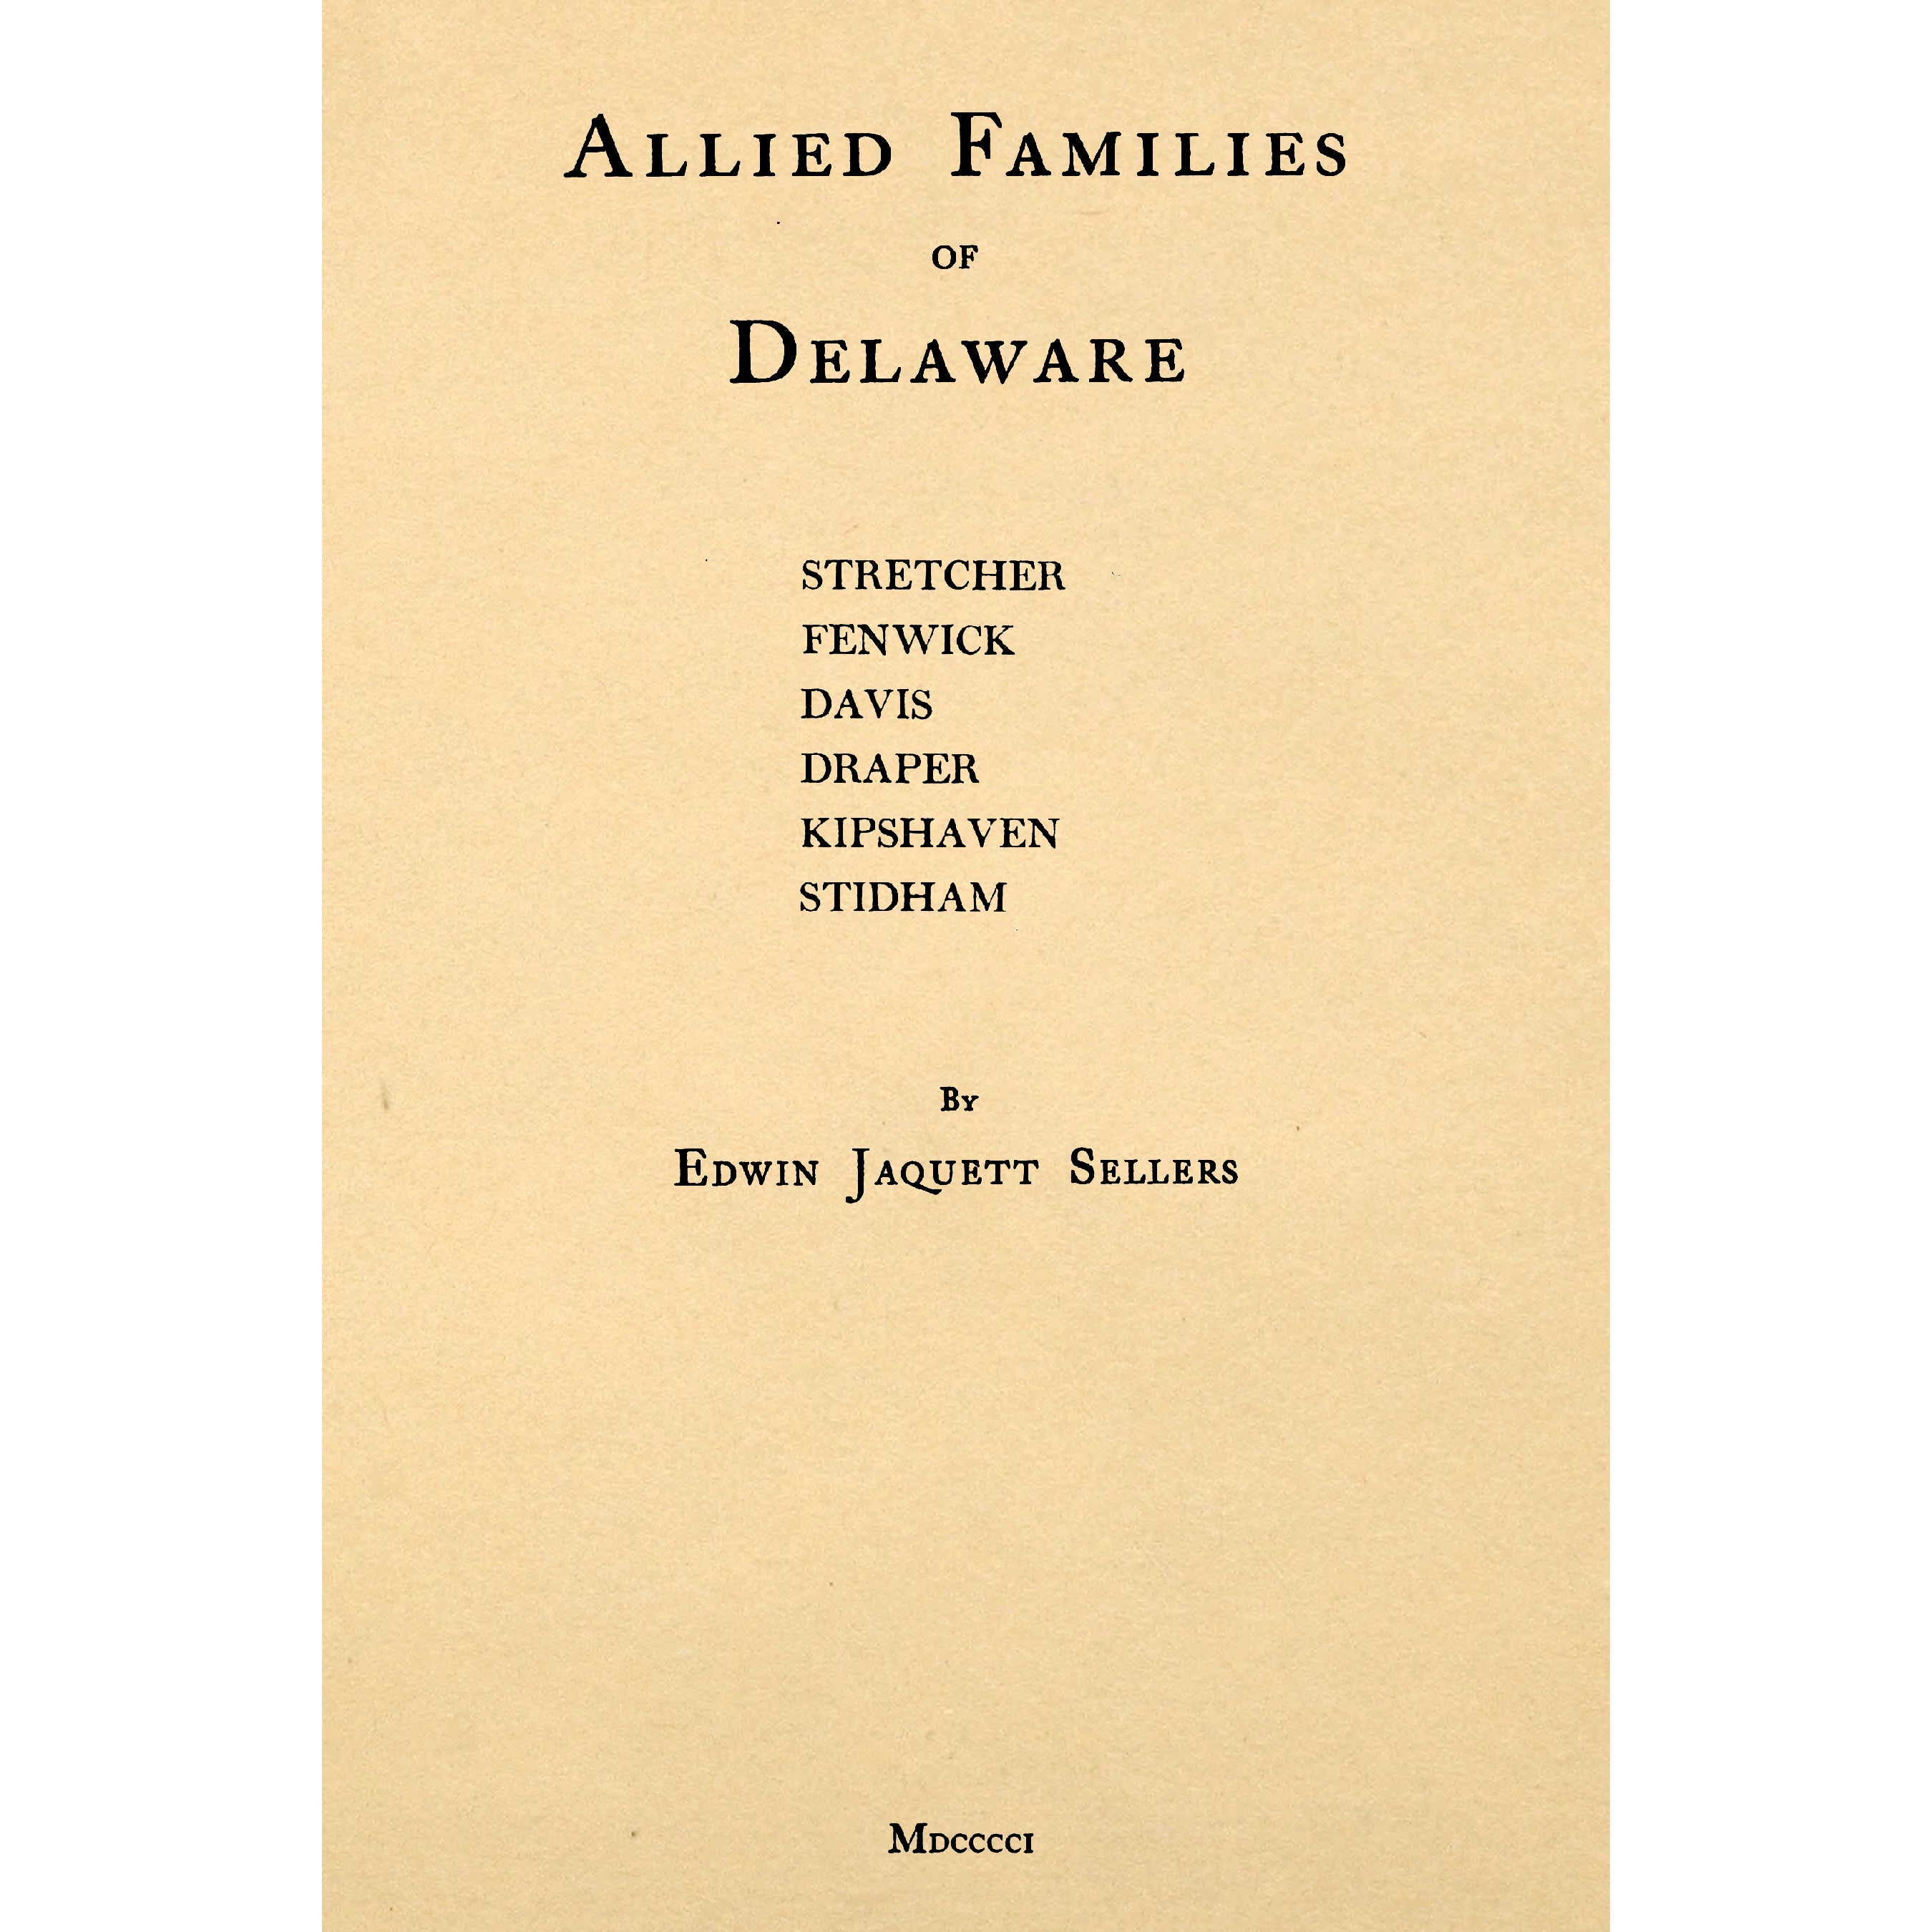 Allied families of Delaware : Stretcher, Fenwick, Davis, Draper, Kipshaven, Stidham